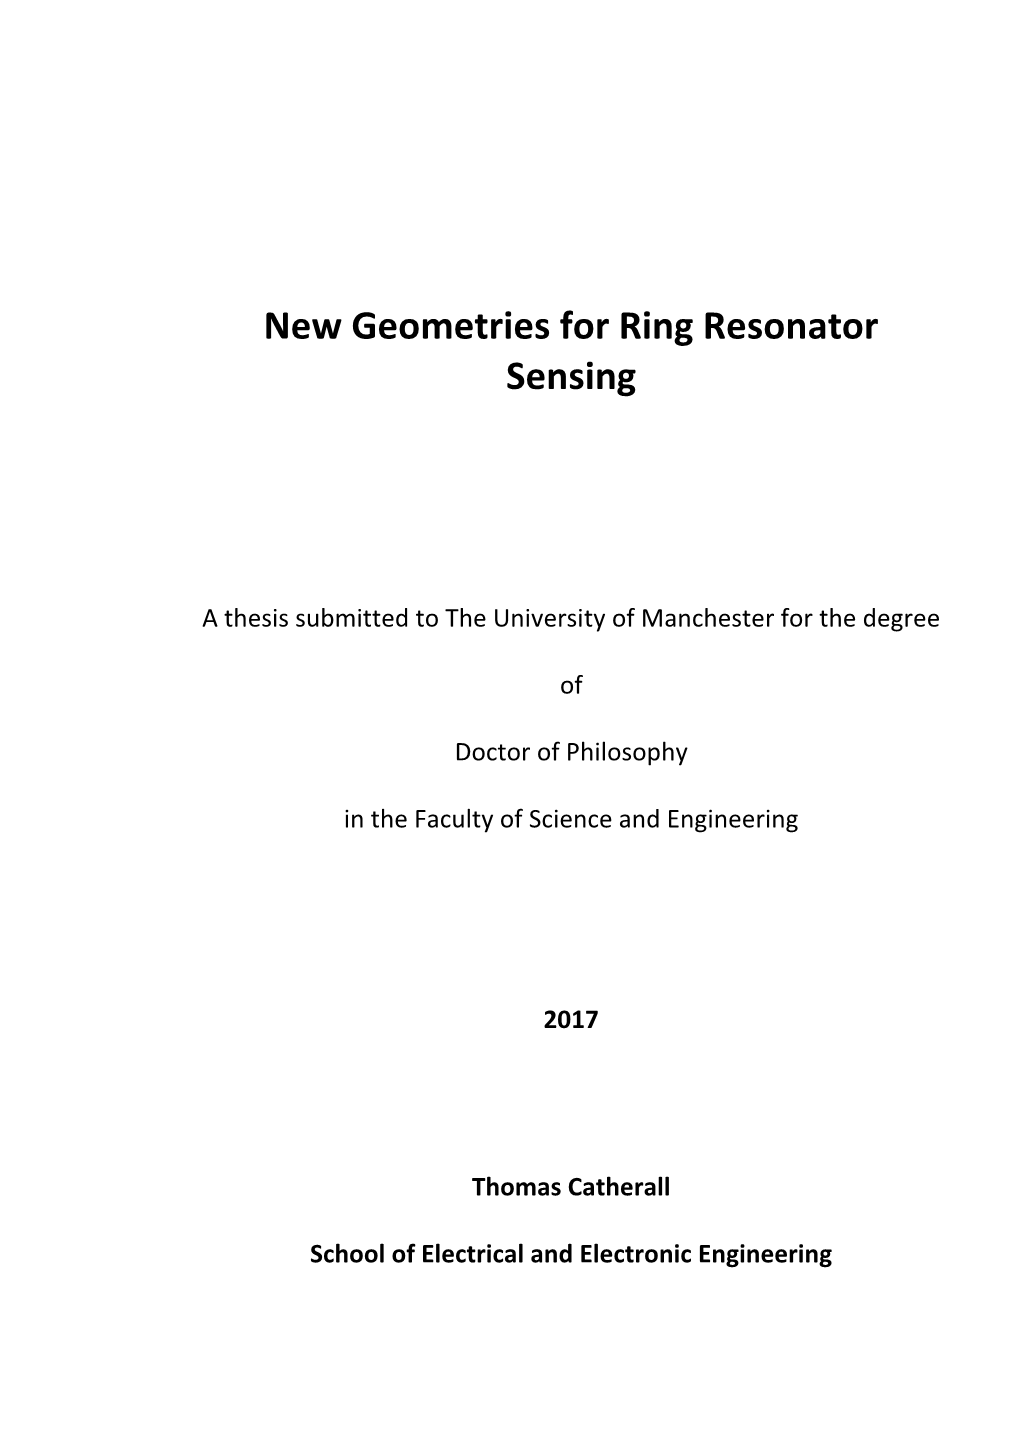 New Geometries for Ring Resonator Sensing